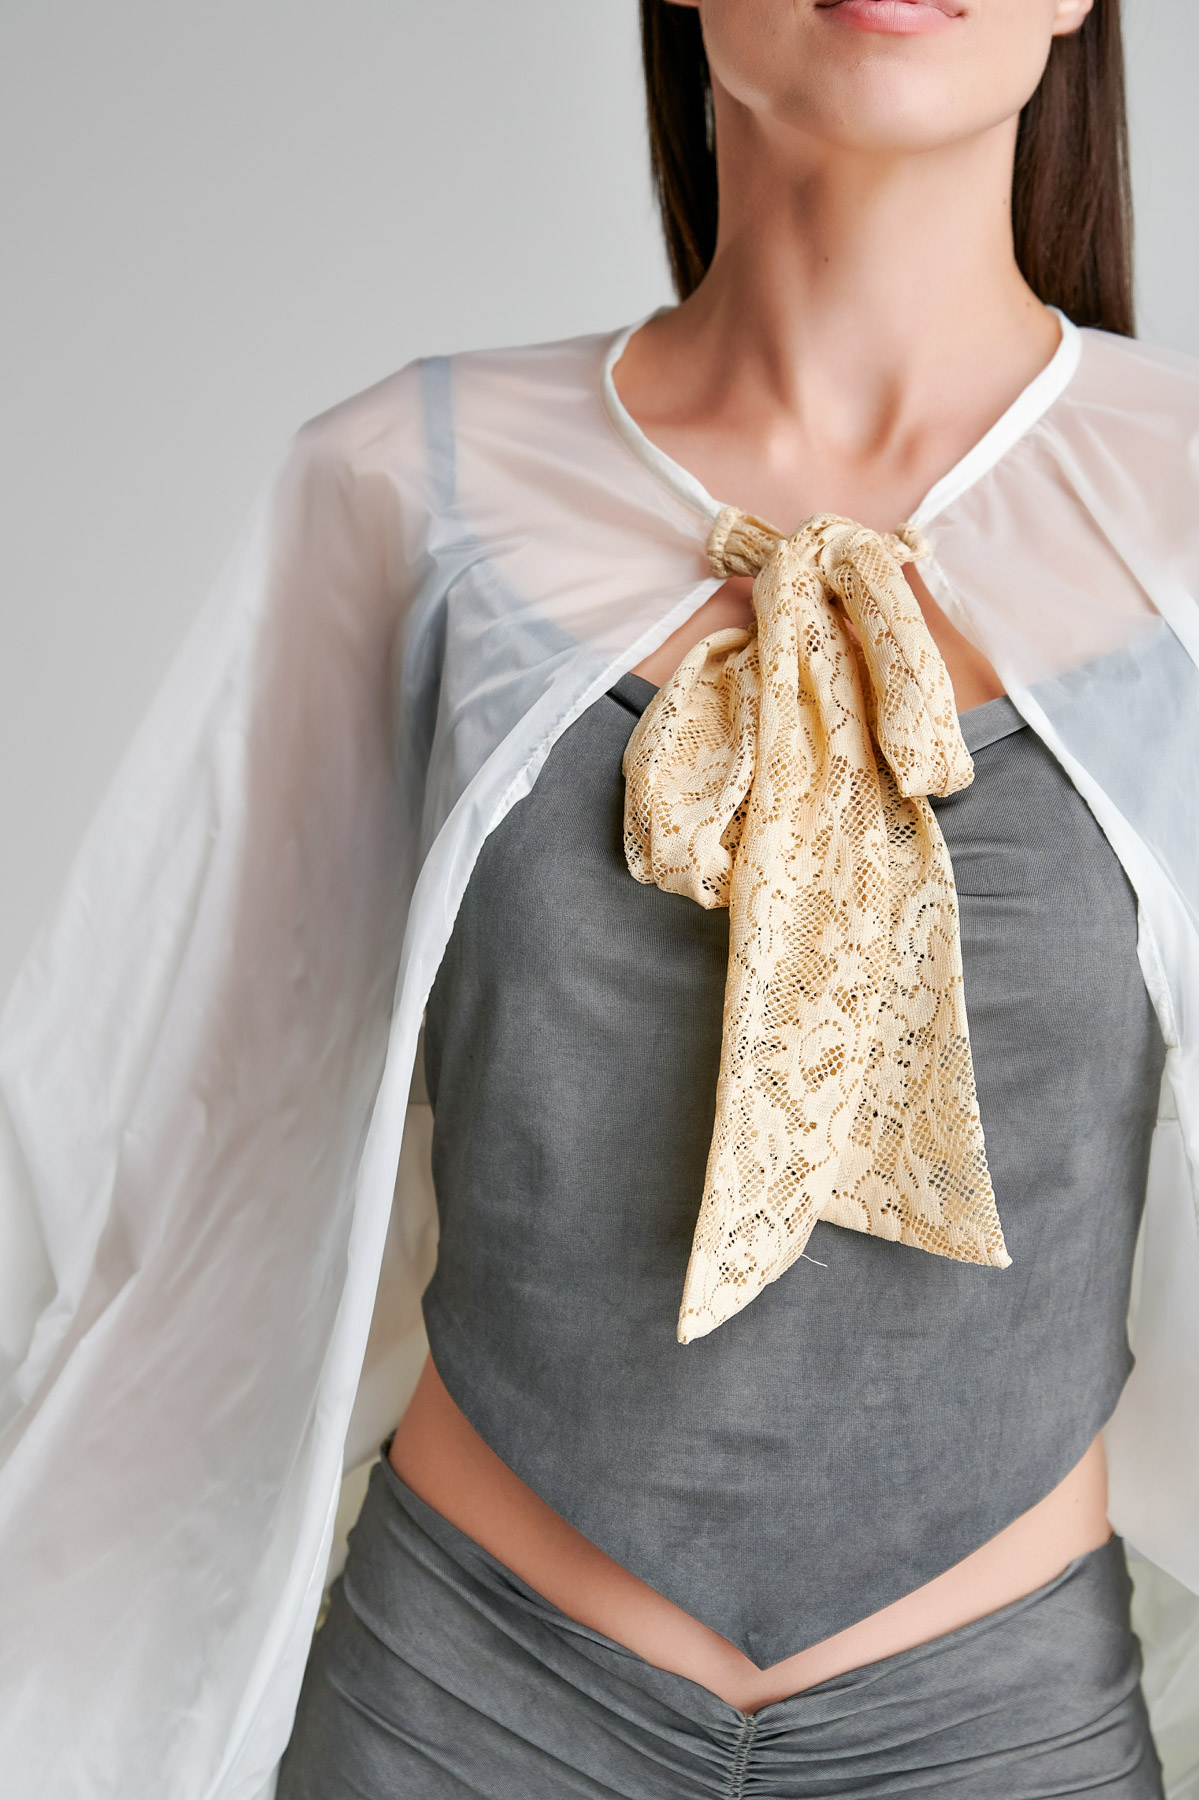 CATISIA Top with gray spaghetti straps. Natural fabrics, original design, handmade embroidery